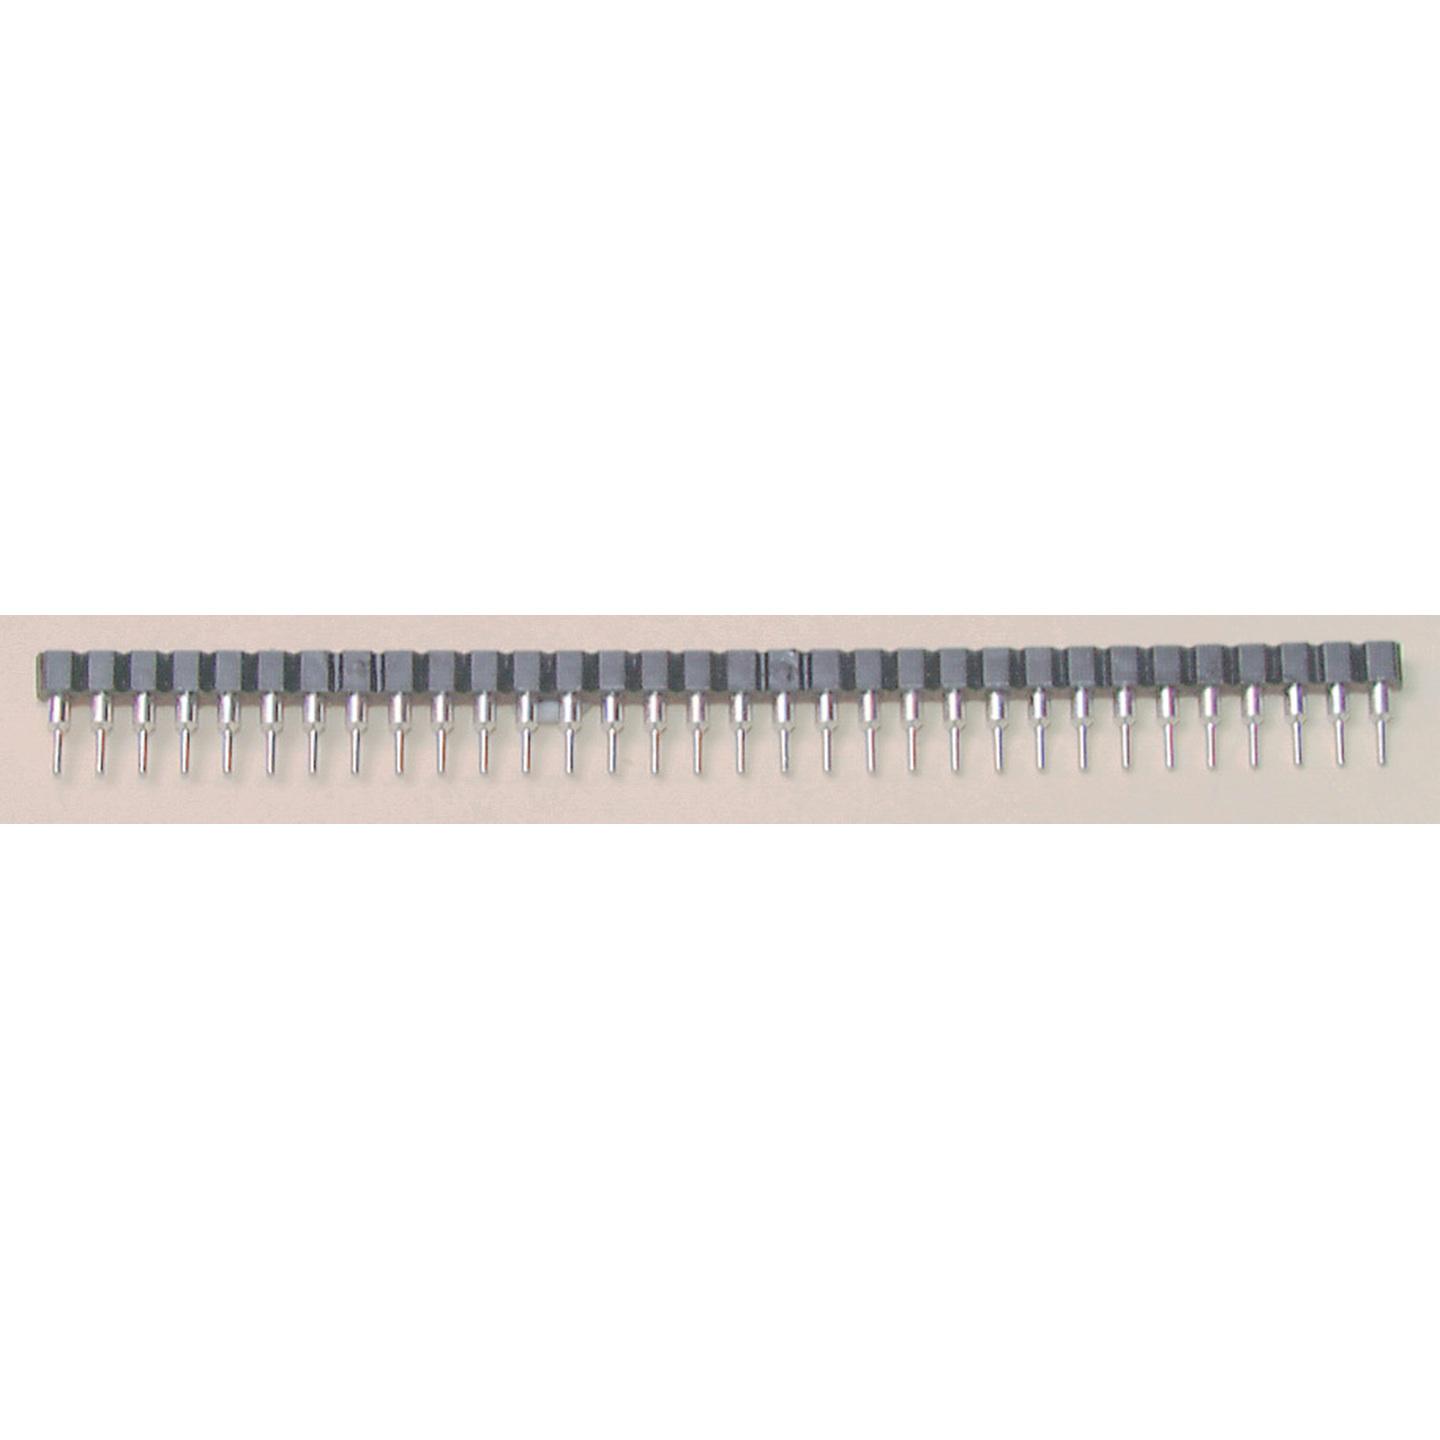 Machined Pin IC Socket Strips - 32 Way